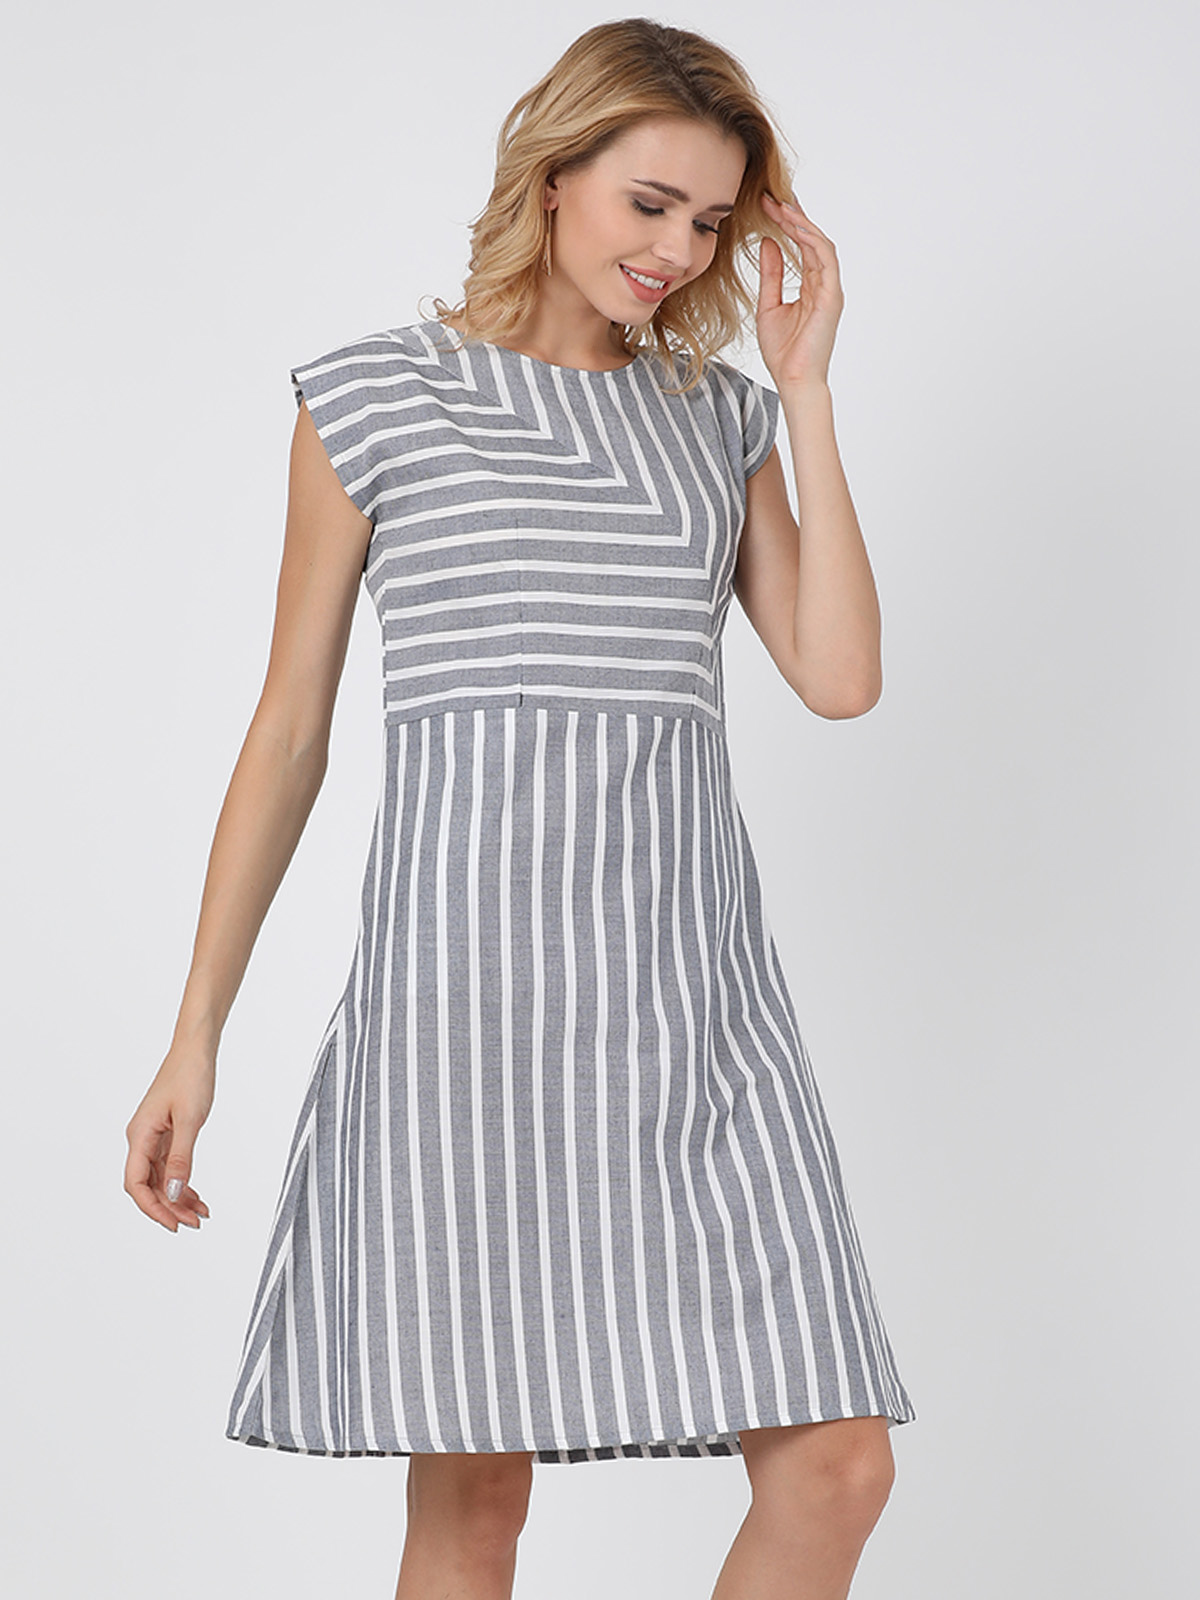  Cotton Linen Stylish Striped Women's Dress